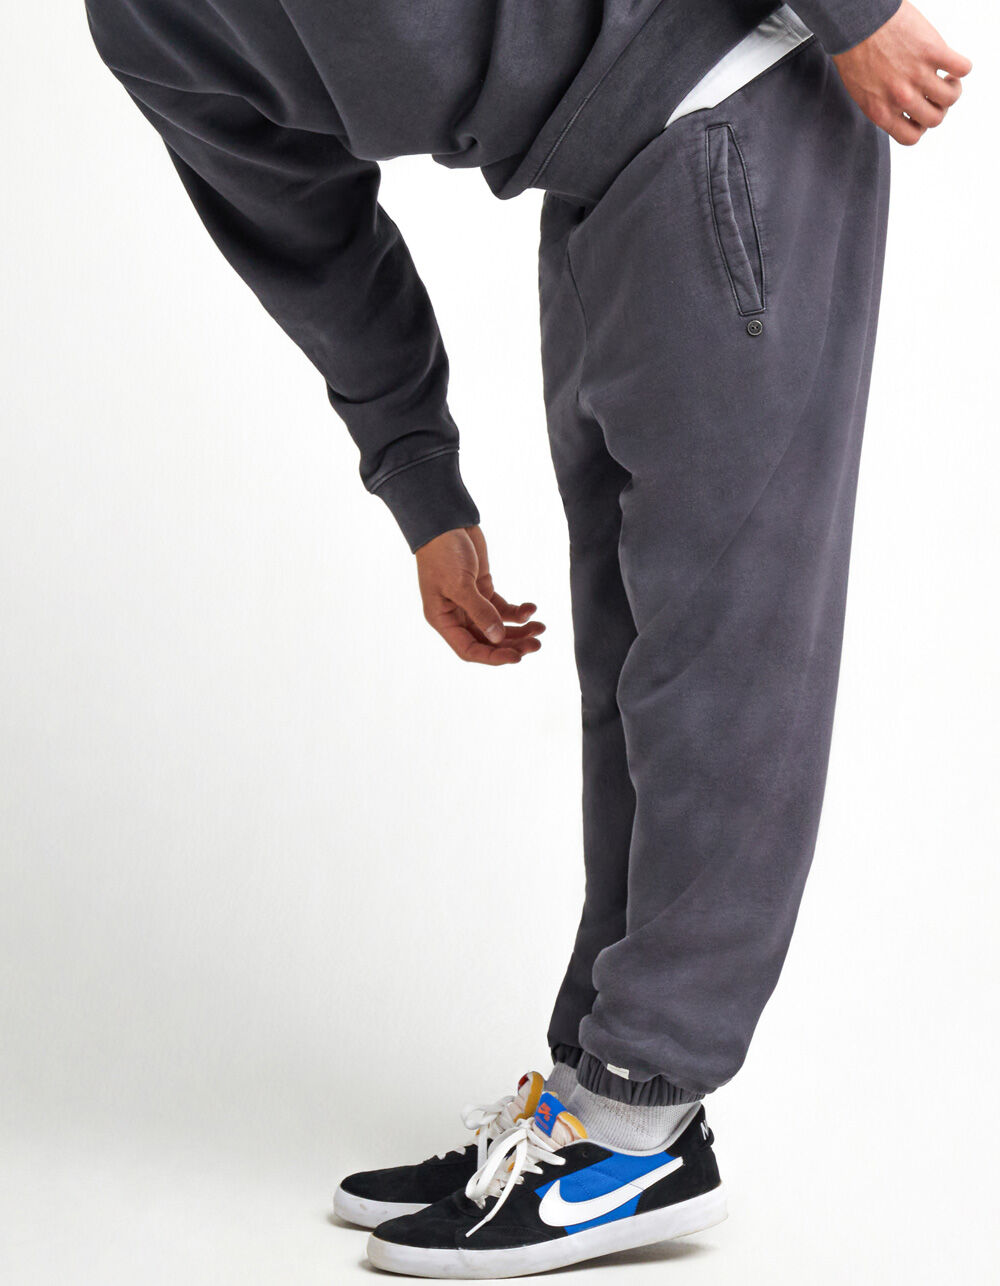 RSQ Premium Mens Wash Black Jogger Sweatpants - WASH BLACK